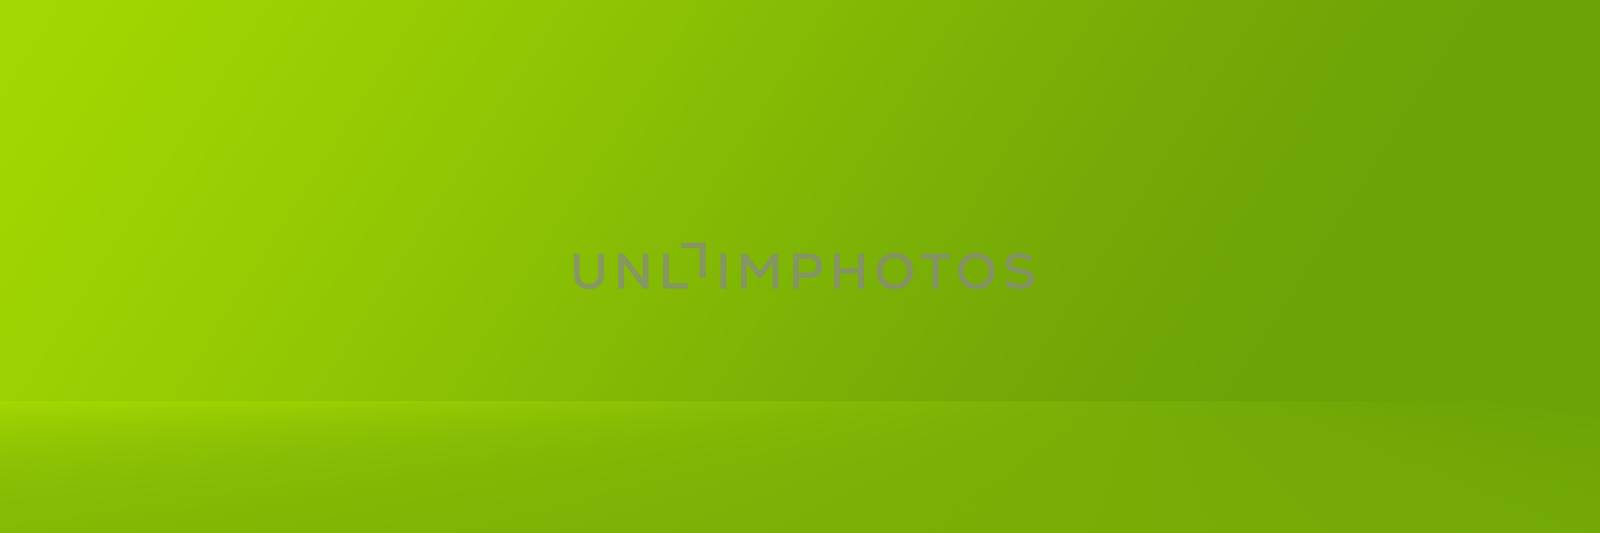 Studio Background - Bright Green Gradient horizontal studio room wall background